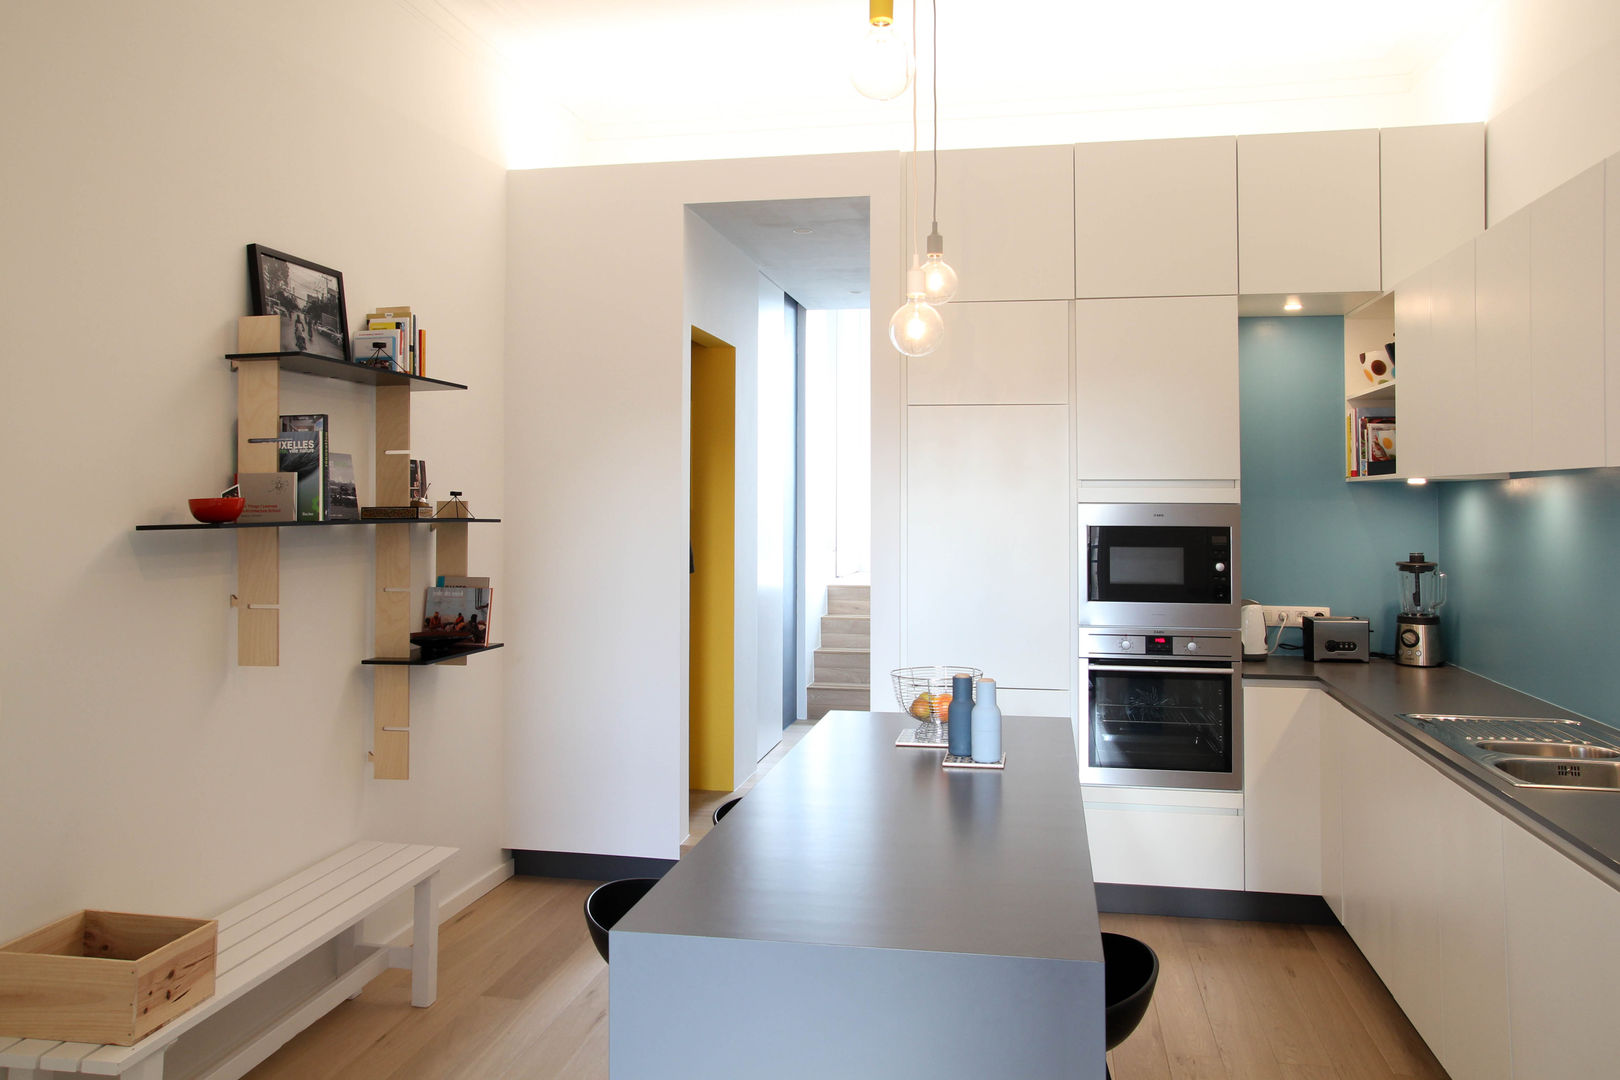 Rénovation d'un appartement bruxellois, Alizée Dassonville | architecture Alizée Dassonville | architecture Nhà bếp phong cách hiện đại